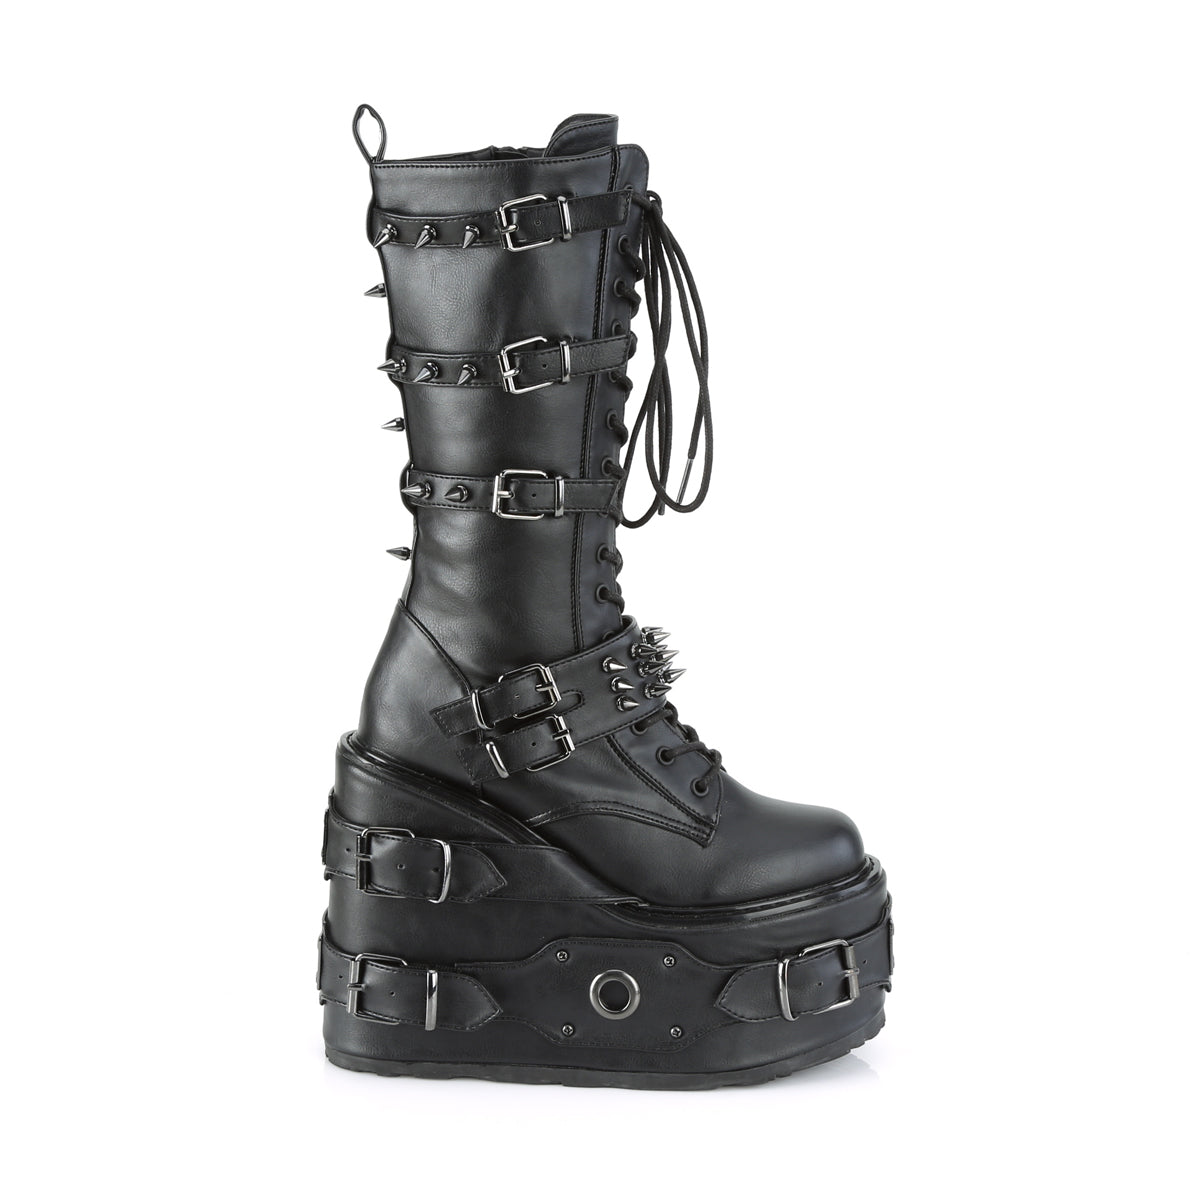 SWING-327 Demonia Black Vegan Leather Women's Mid-Calf & Knee High Boots [Demonia Cult Alternative Footwear]